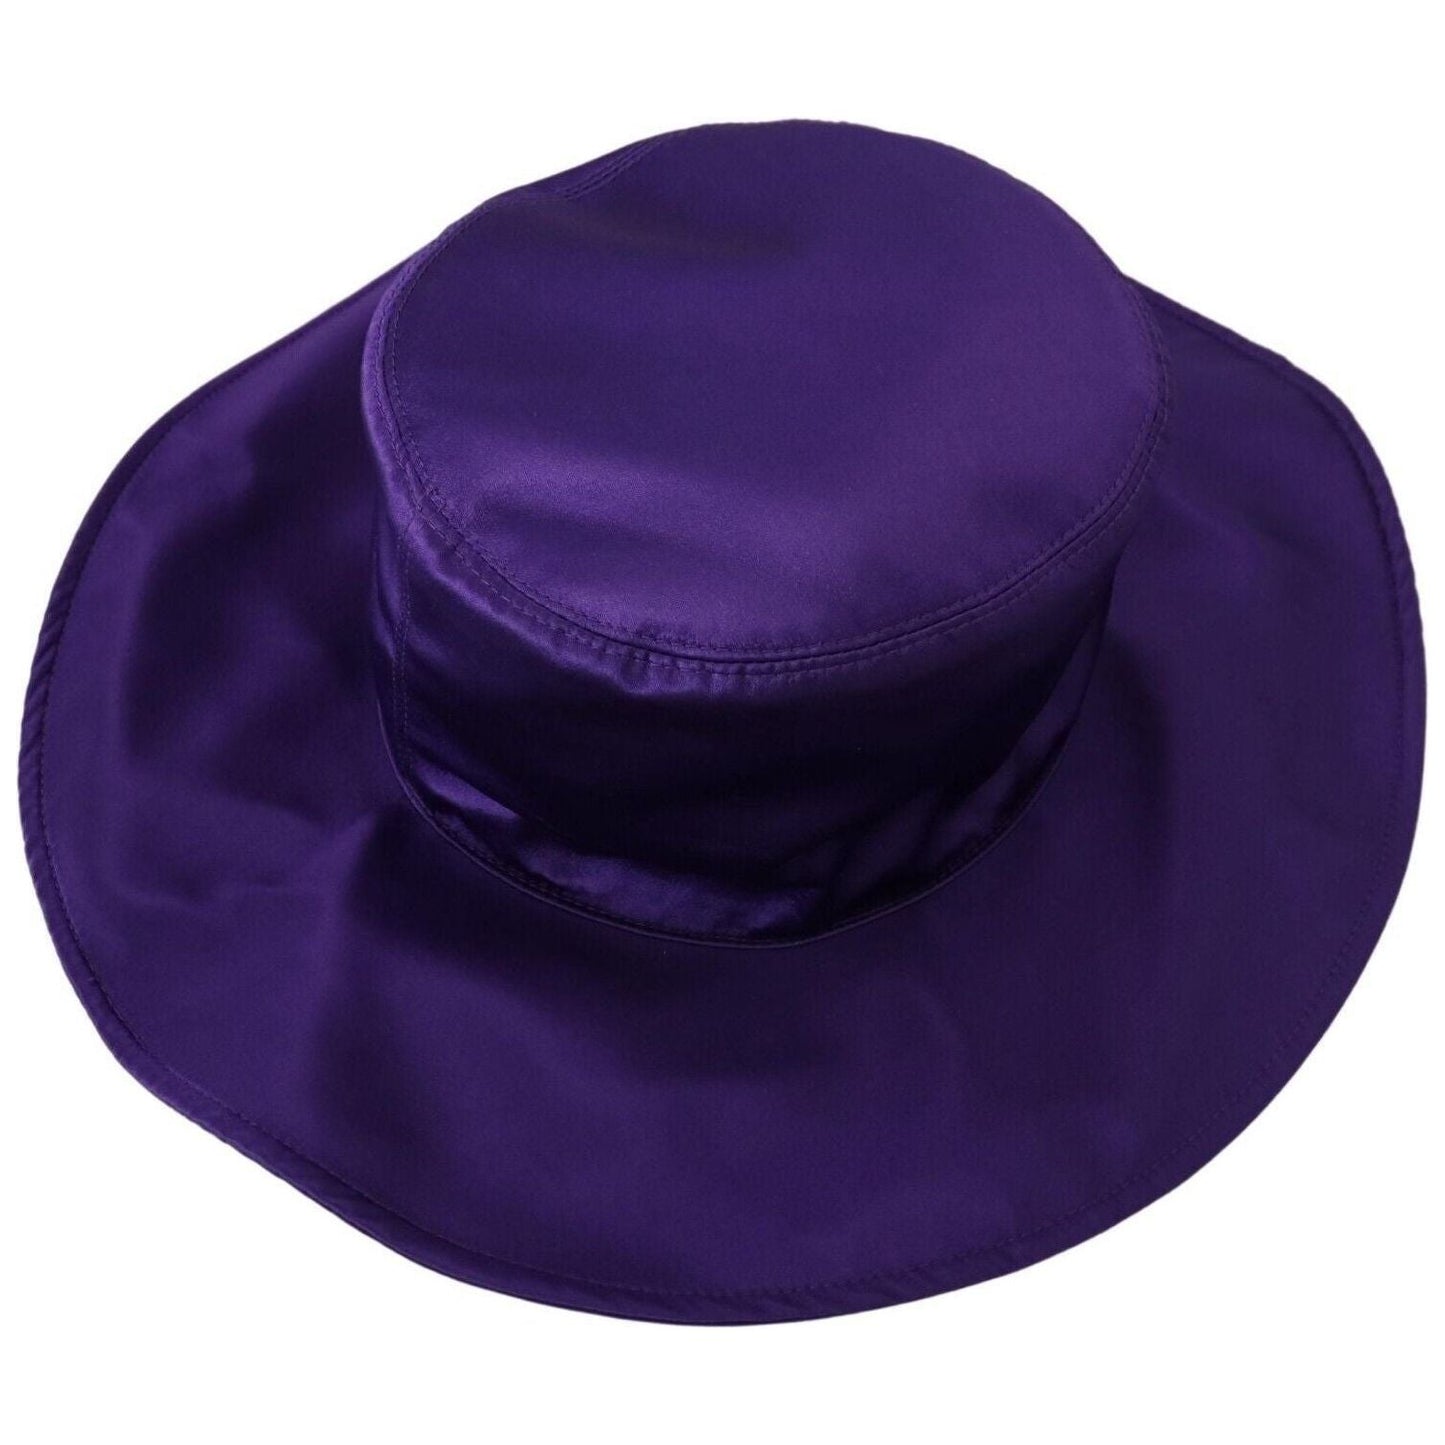 Dolce & Gabbana Elegant Purple Silk Top Hat purple-silk-stretch-top-hat s-l1600-73-3-ca81edf4-19f.jpg